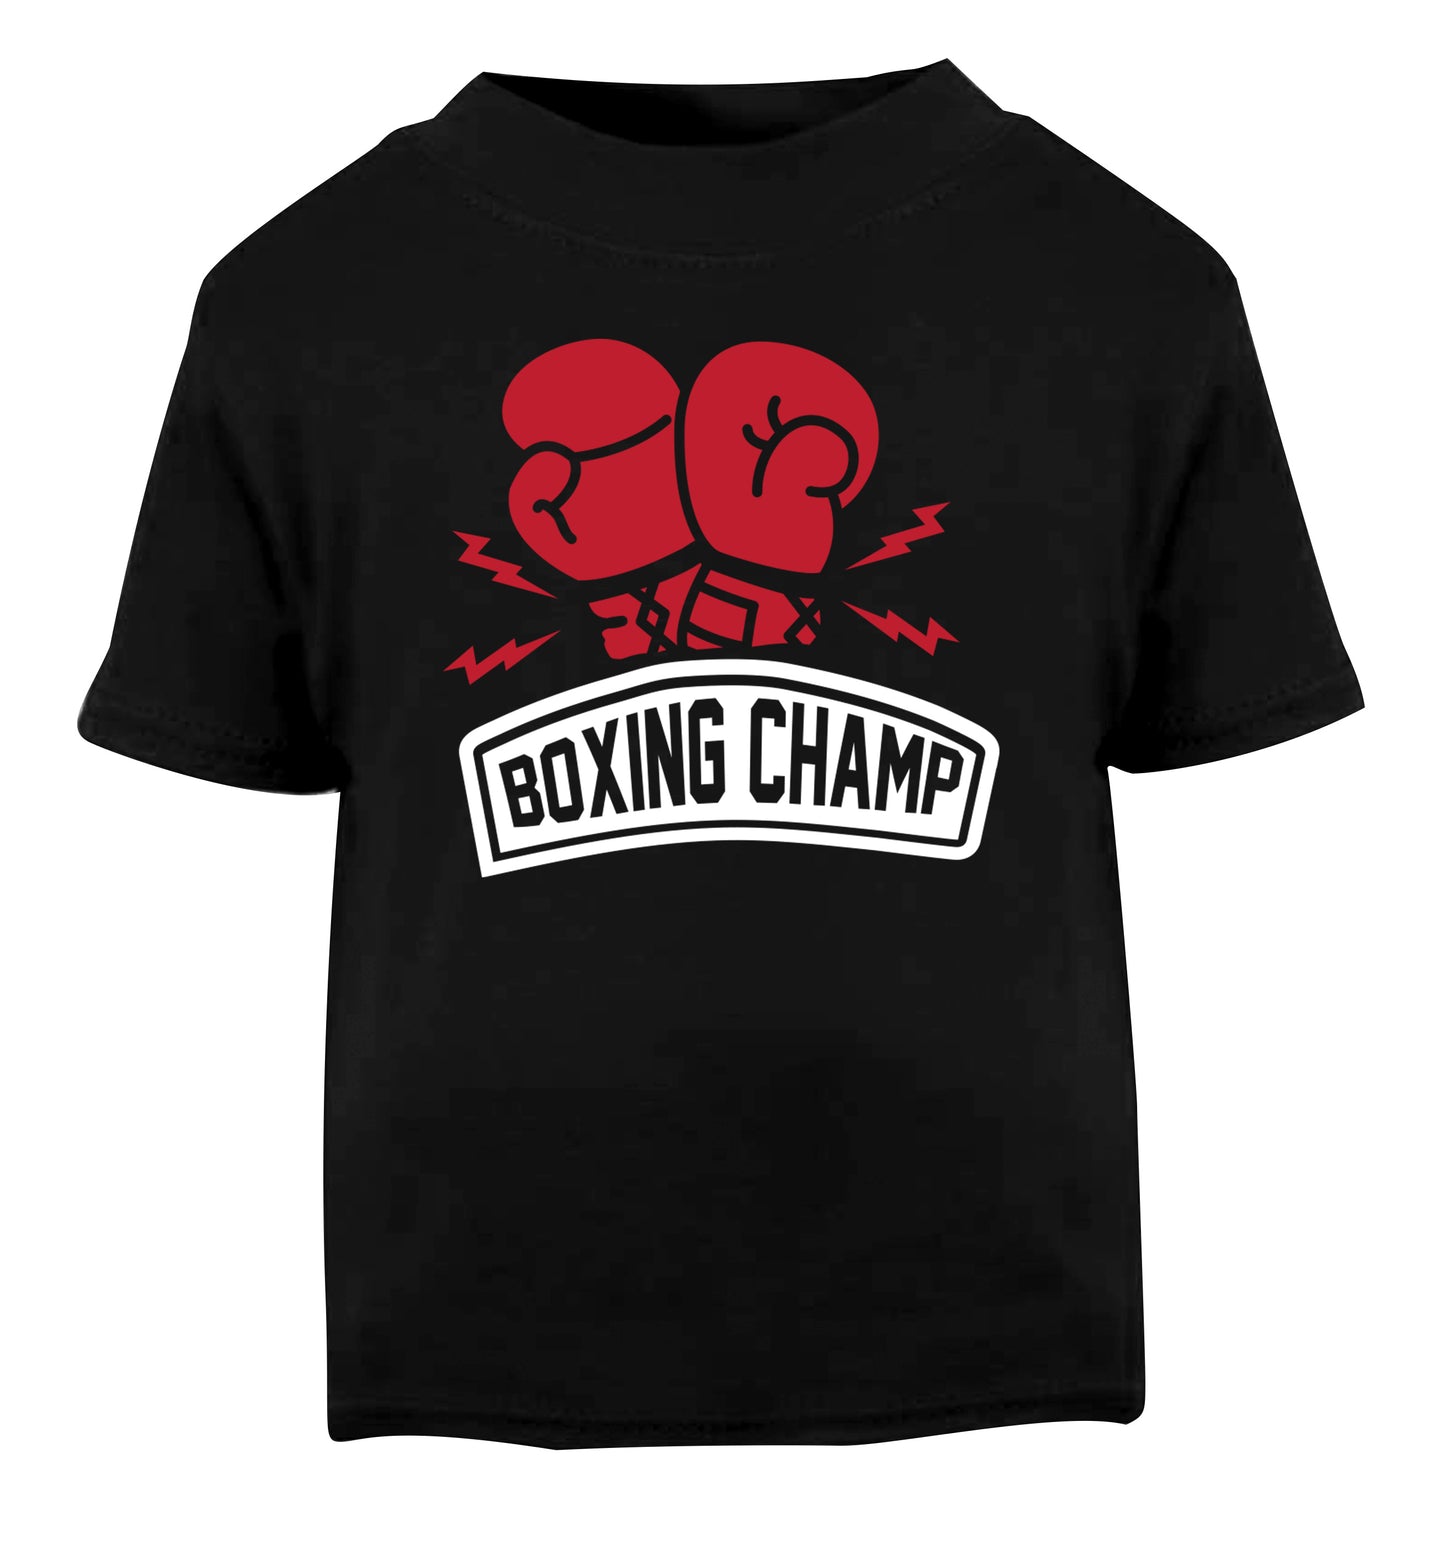 Boxing Champ Black Baby Toddler Tshirt 2 years